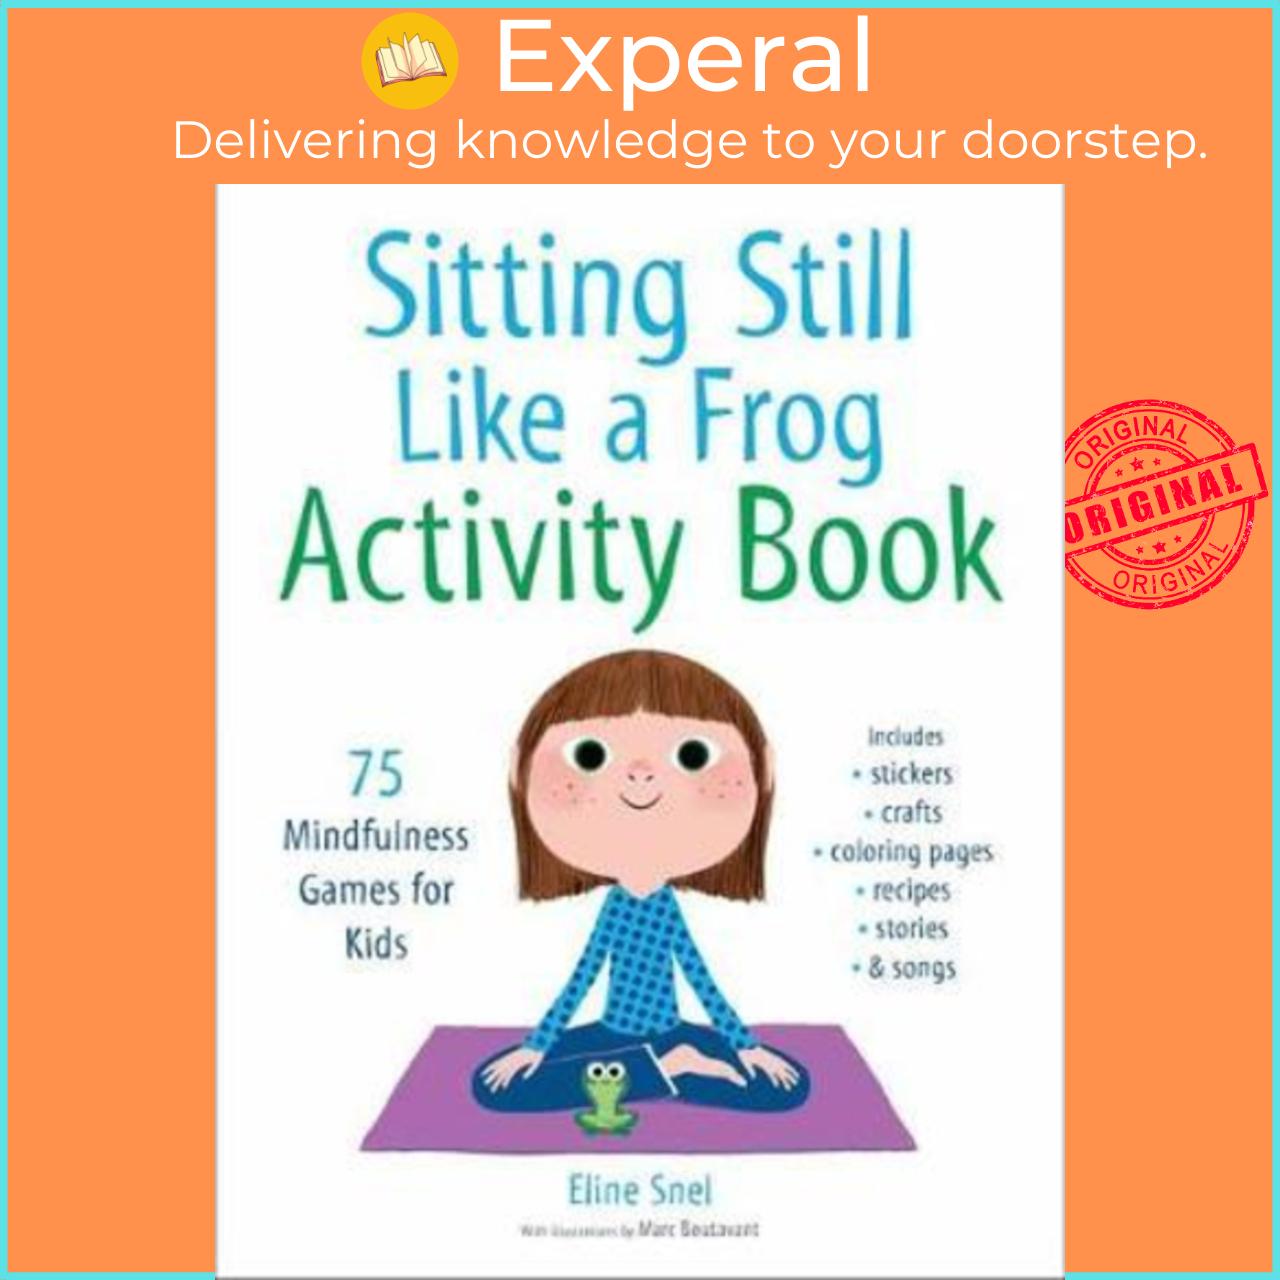 Sách - Sitting Still Like a Frog Activity Book : 75 Mindfulness Games for Kids by Eline Snel (US edition, paperback)